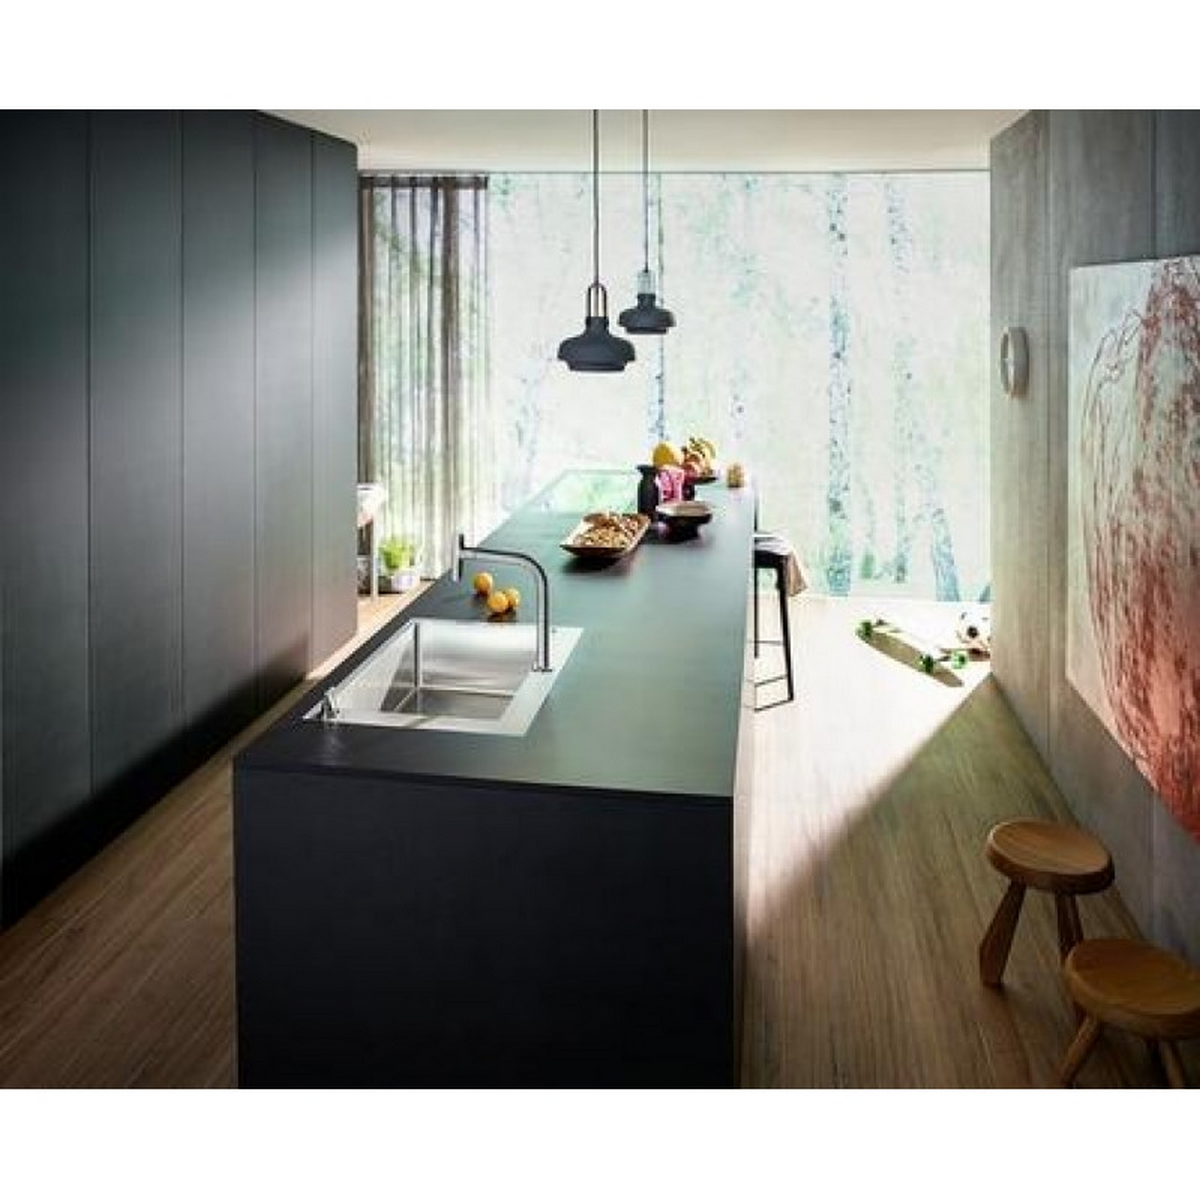 Кухонный комплект Hansgrohe C71-F660-08 43202000 цена 67996 грн - фотография 2